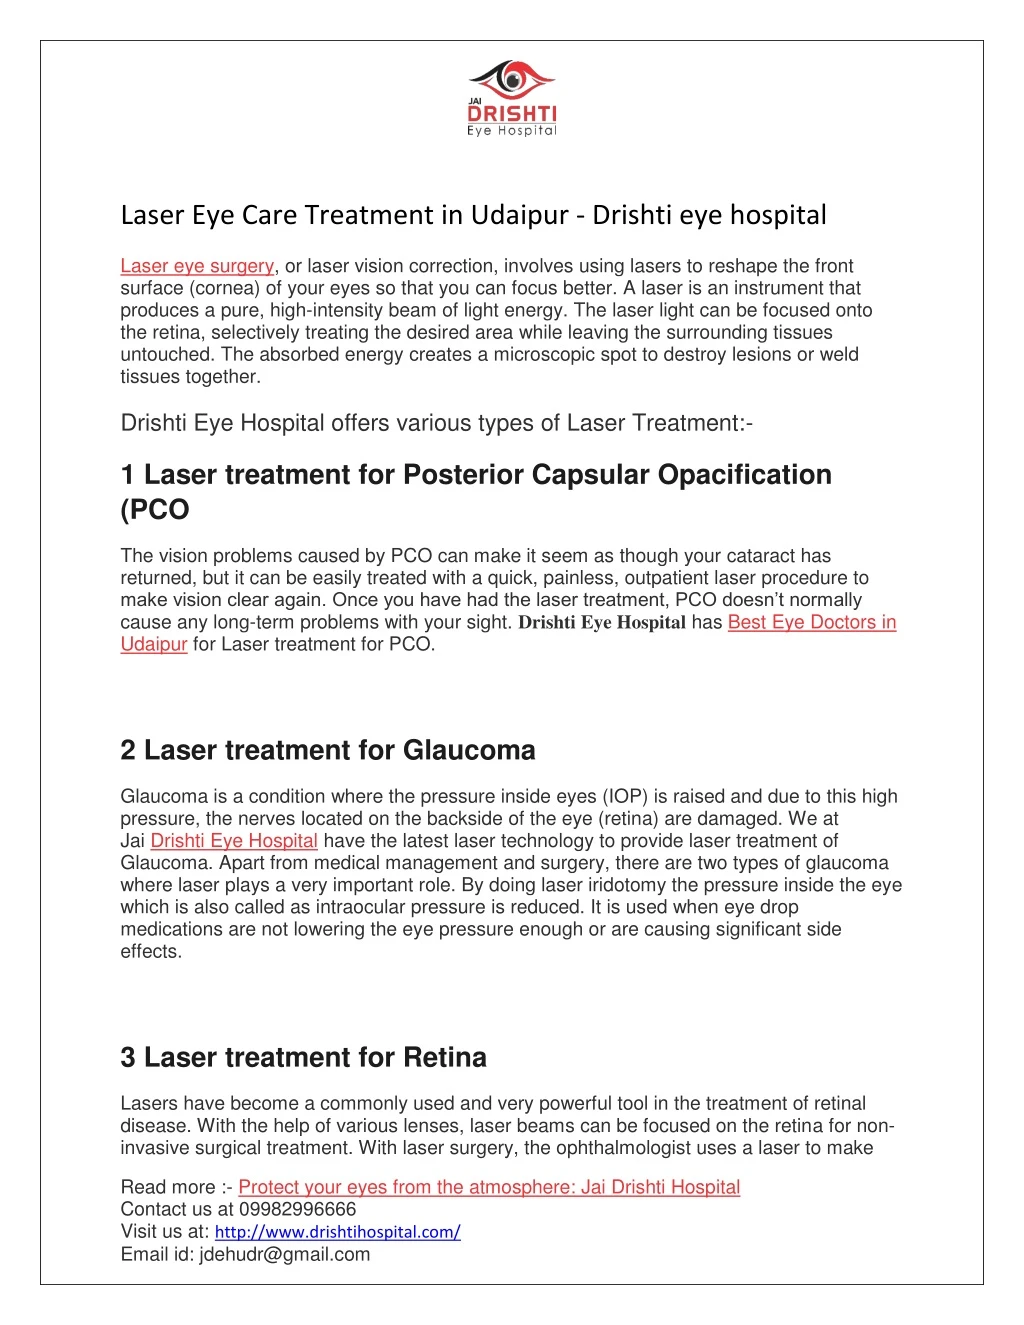 laser eye care treatment in udaipur drishti